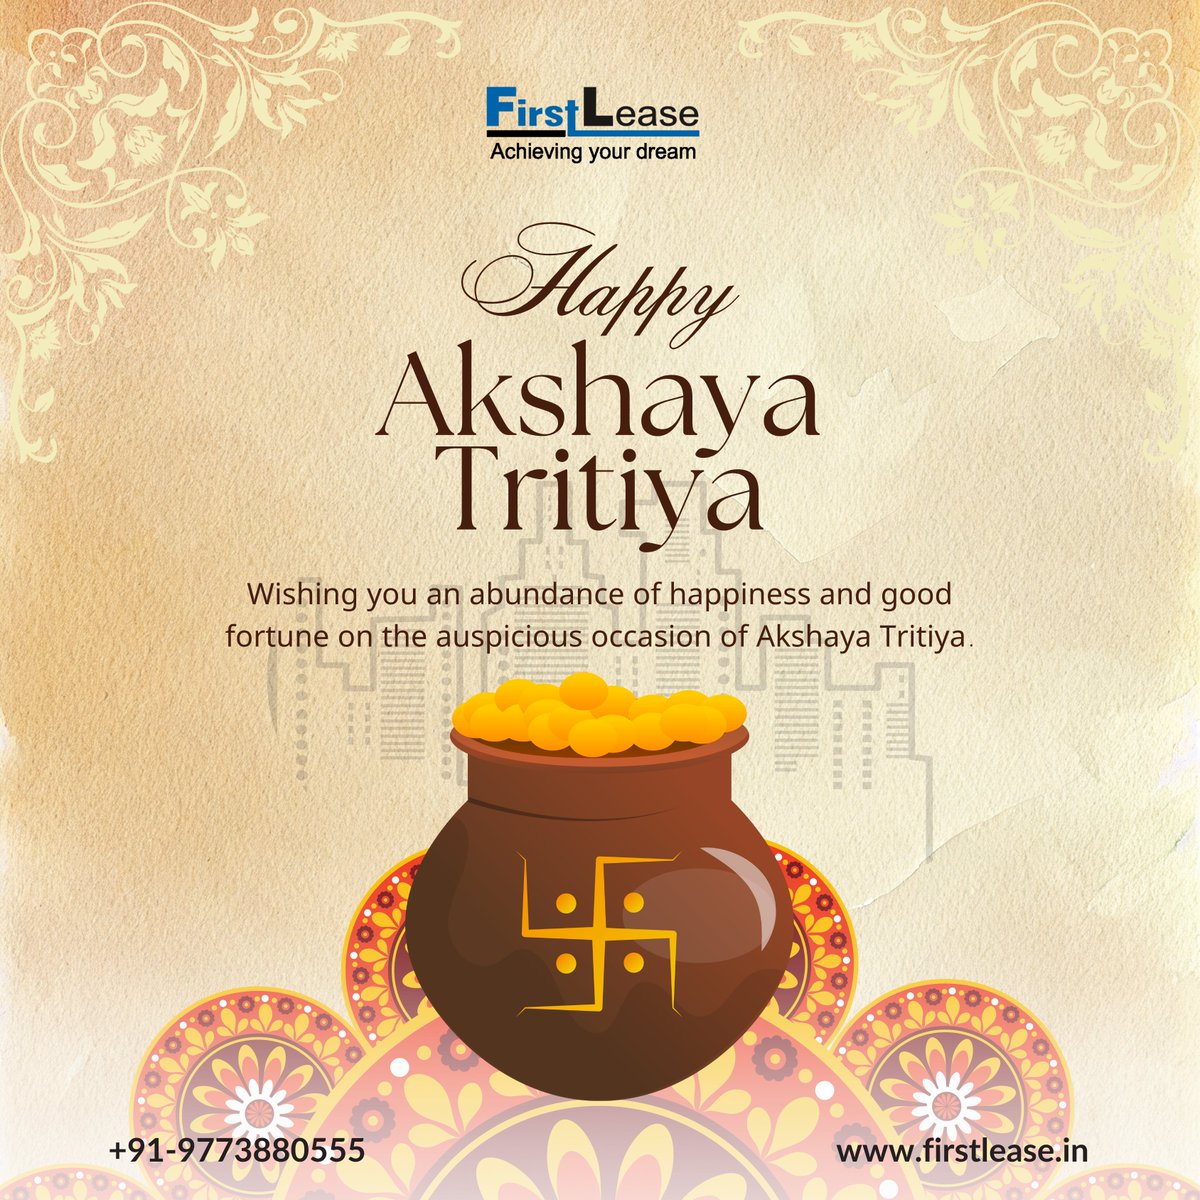 firstlease.in 

FirstLease extends warm wishes of Akshaya Tritiya to one and all. May this auspicious day brings you the gift of Good Health, Wealth, and Prosperity. 

𝐇𝐚𝐩𝐩𝐲 𝐀𝐤𝐬𝐡𝐚𝐲𝐚 𝐓𝐫𝐢𝐭𝐢𝐲𝐚!

#fl #AkshayaTritiya #Vaishakha #LordVishnu #GoddessLakshmi